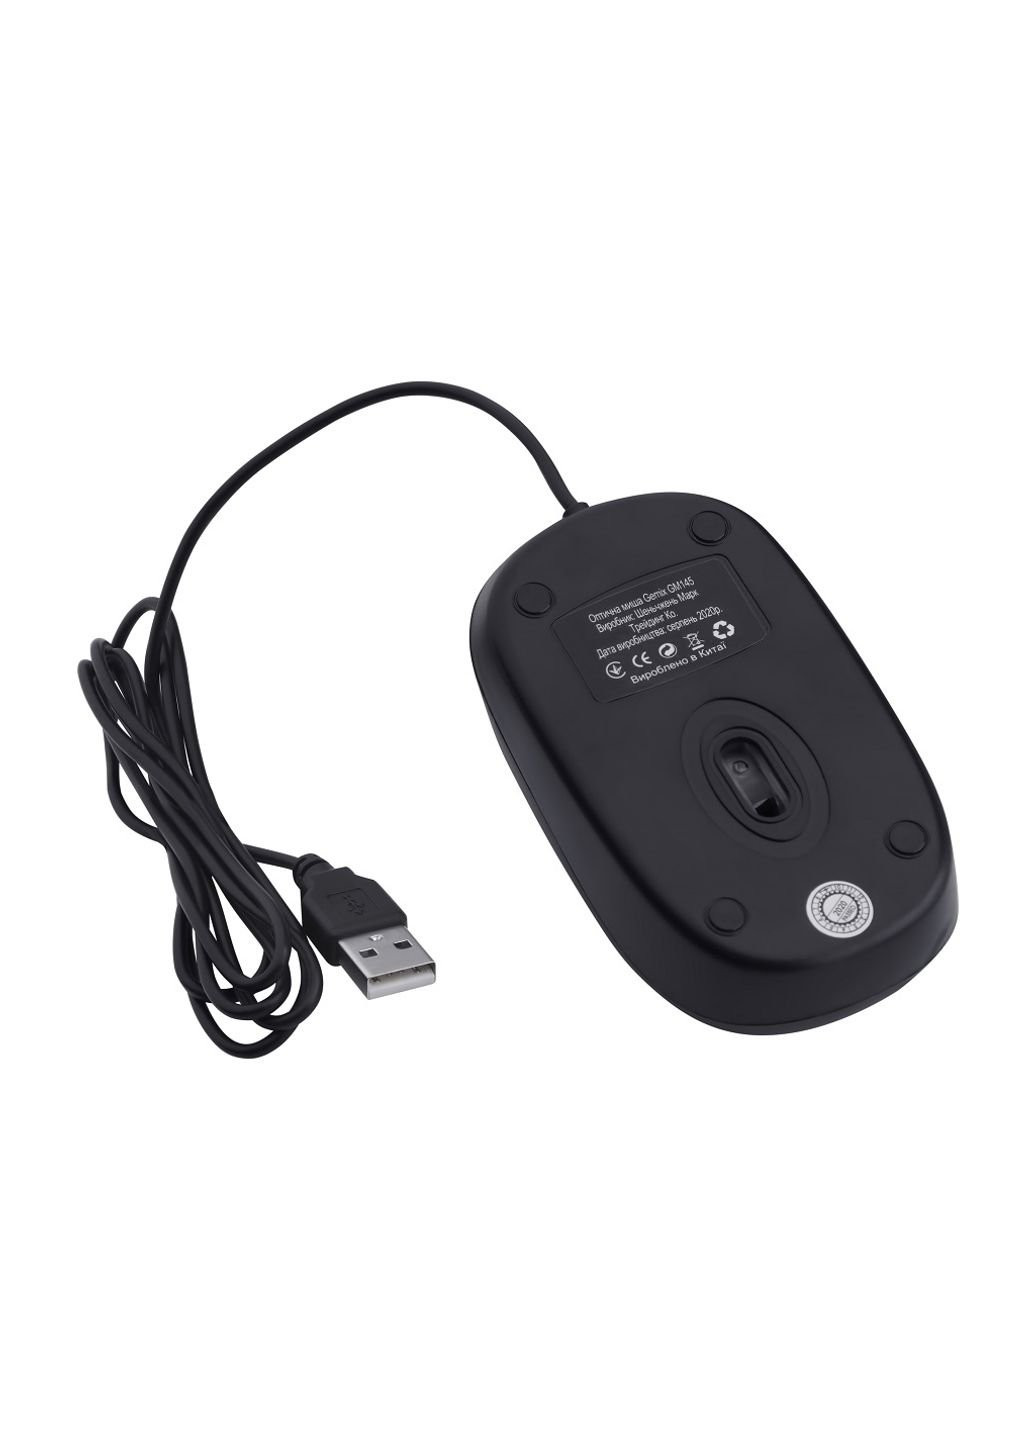 Мышка GM145 USB Black (GM145Bk) Gemix (253547102)